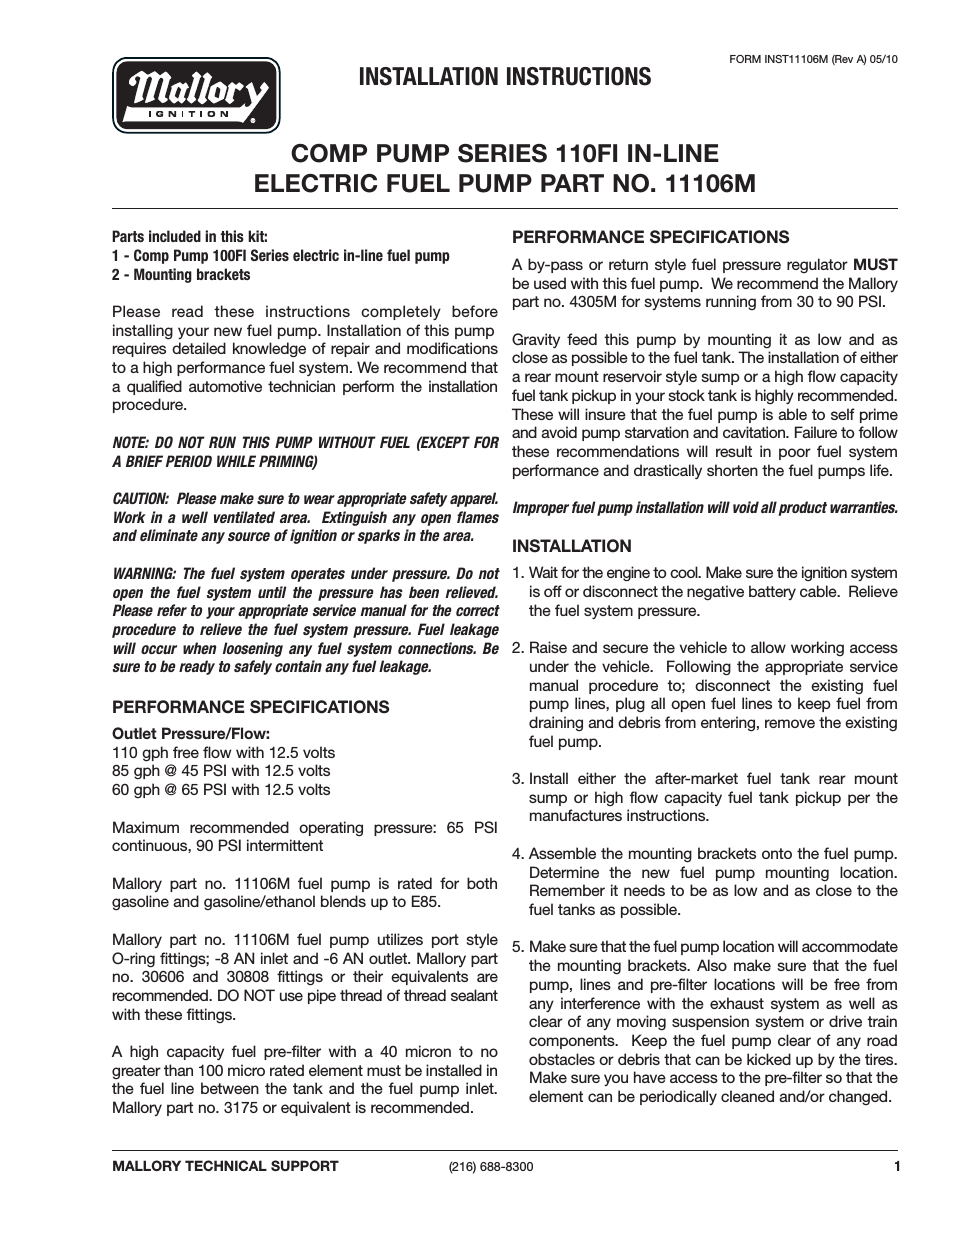 Mallory COMP PUMP SERIES 110FI IN-LINE ELECTRIC FUEL PUMP 11106M